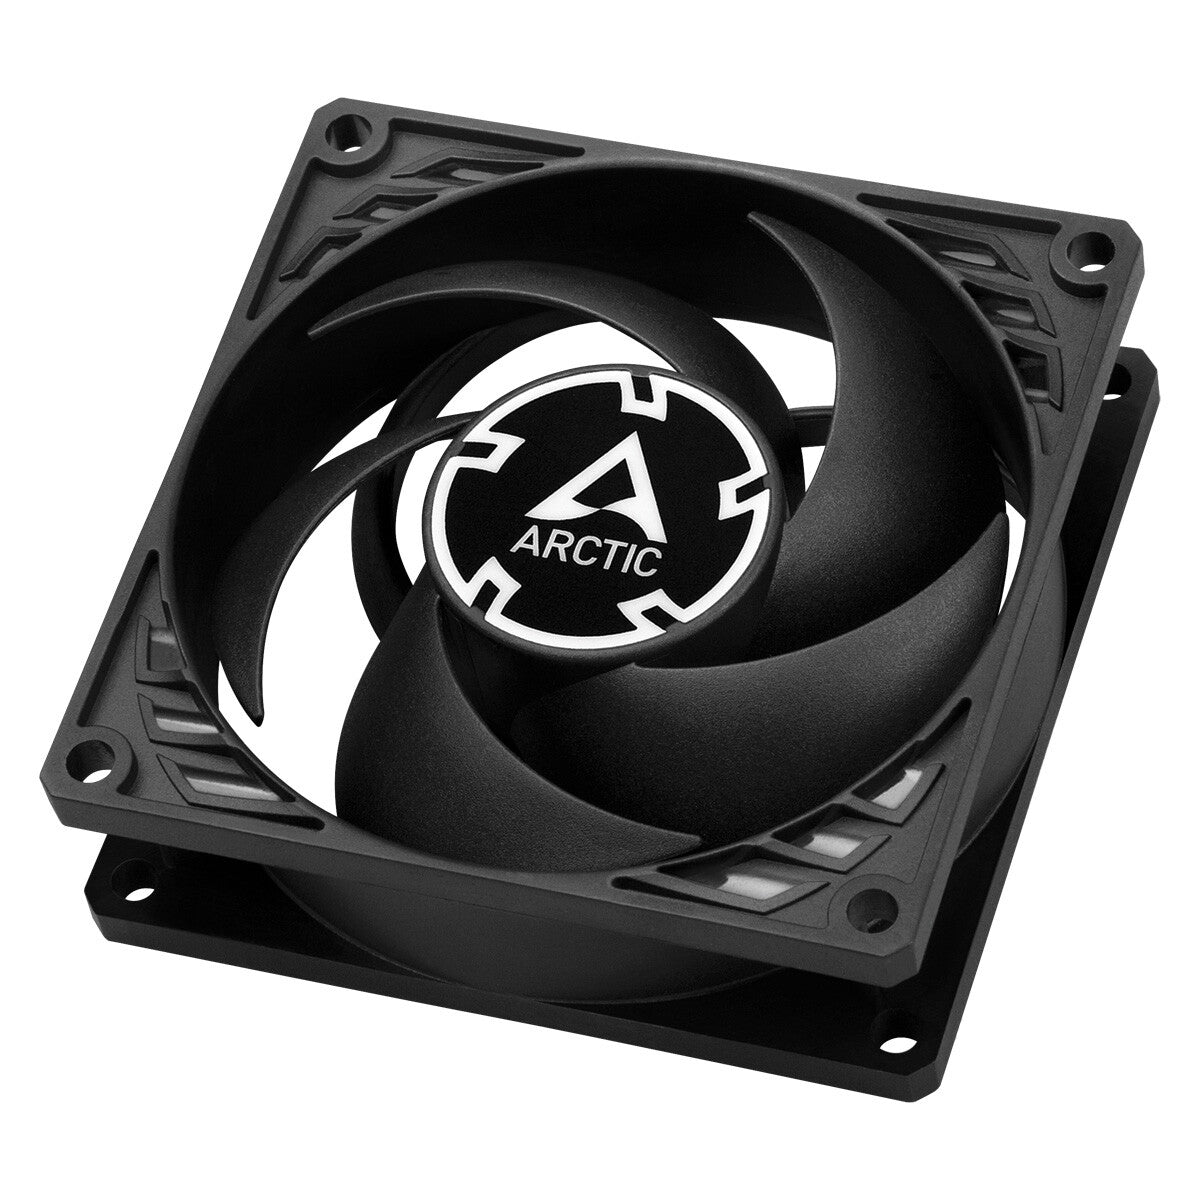 ARCTIC P8 Max - Computer Case Fan in Black - 80mm